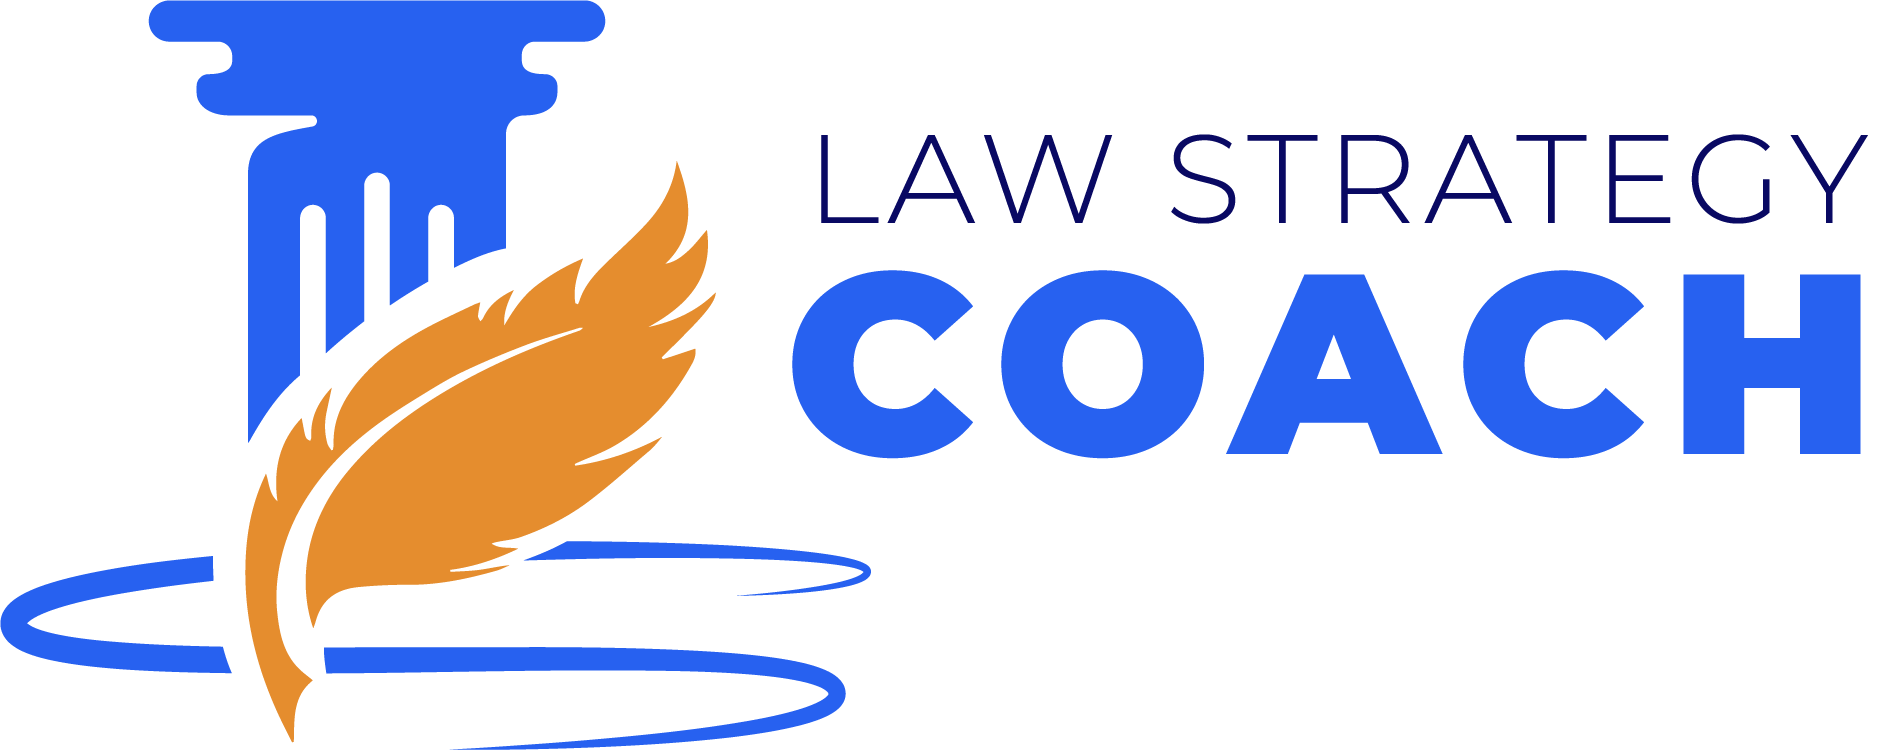 law strategy coach logo